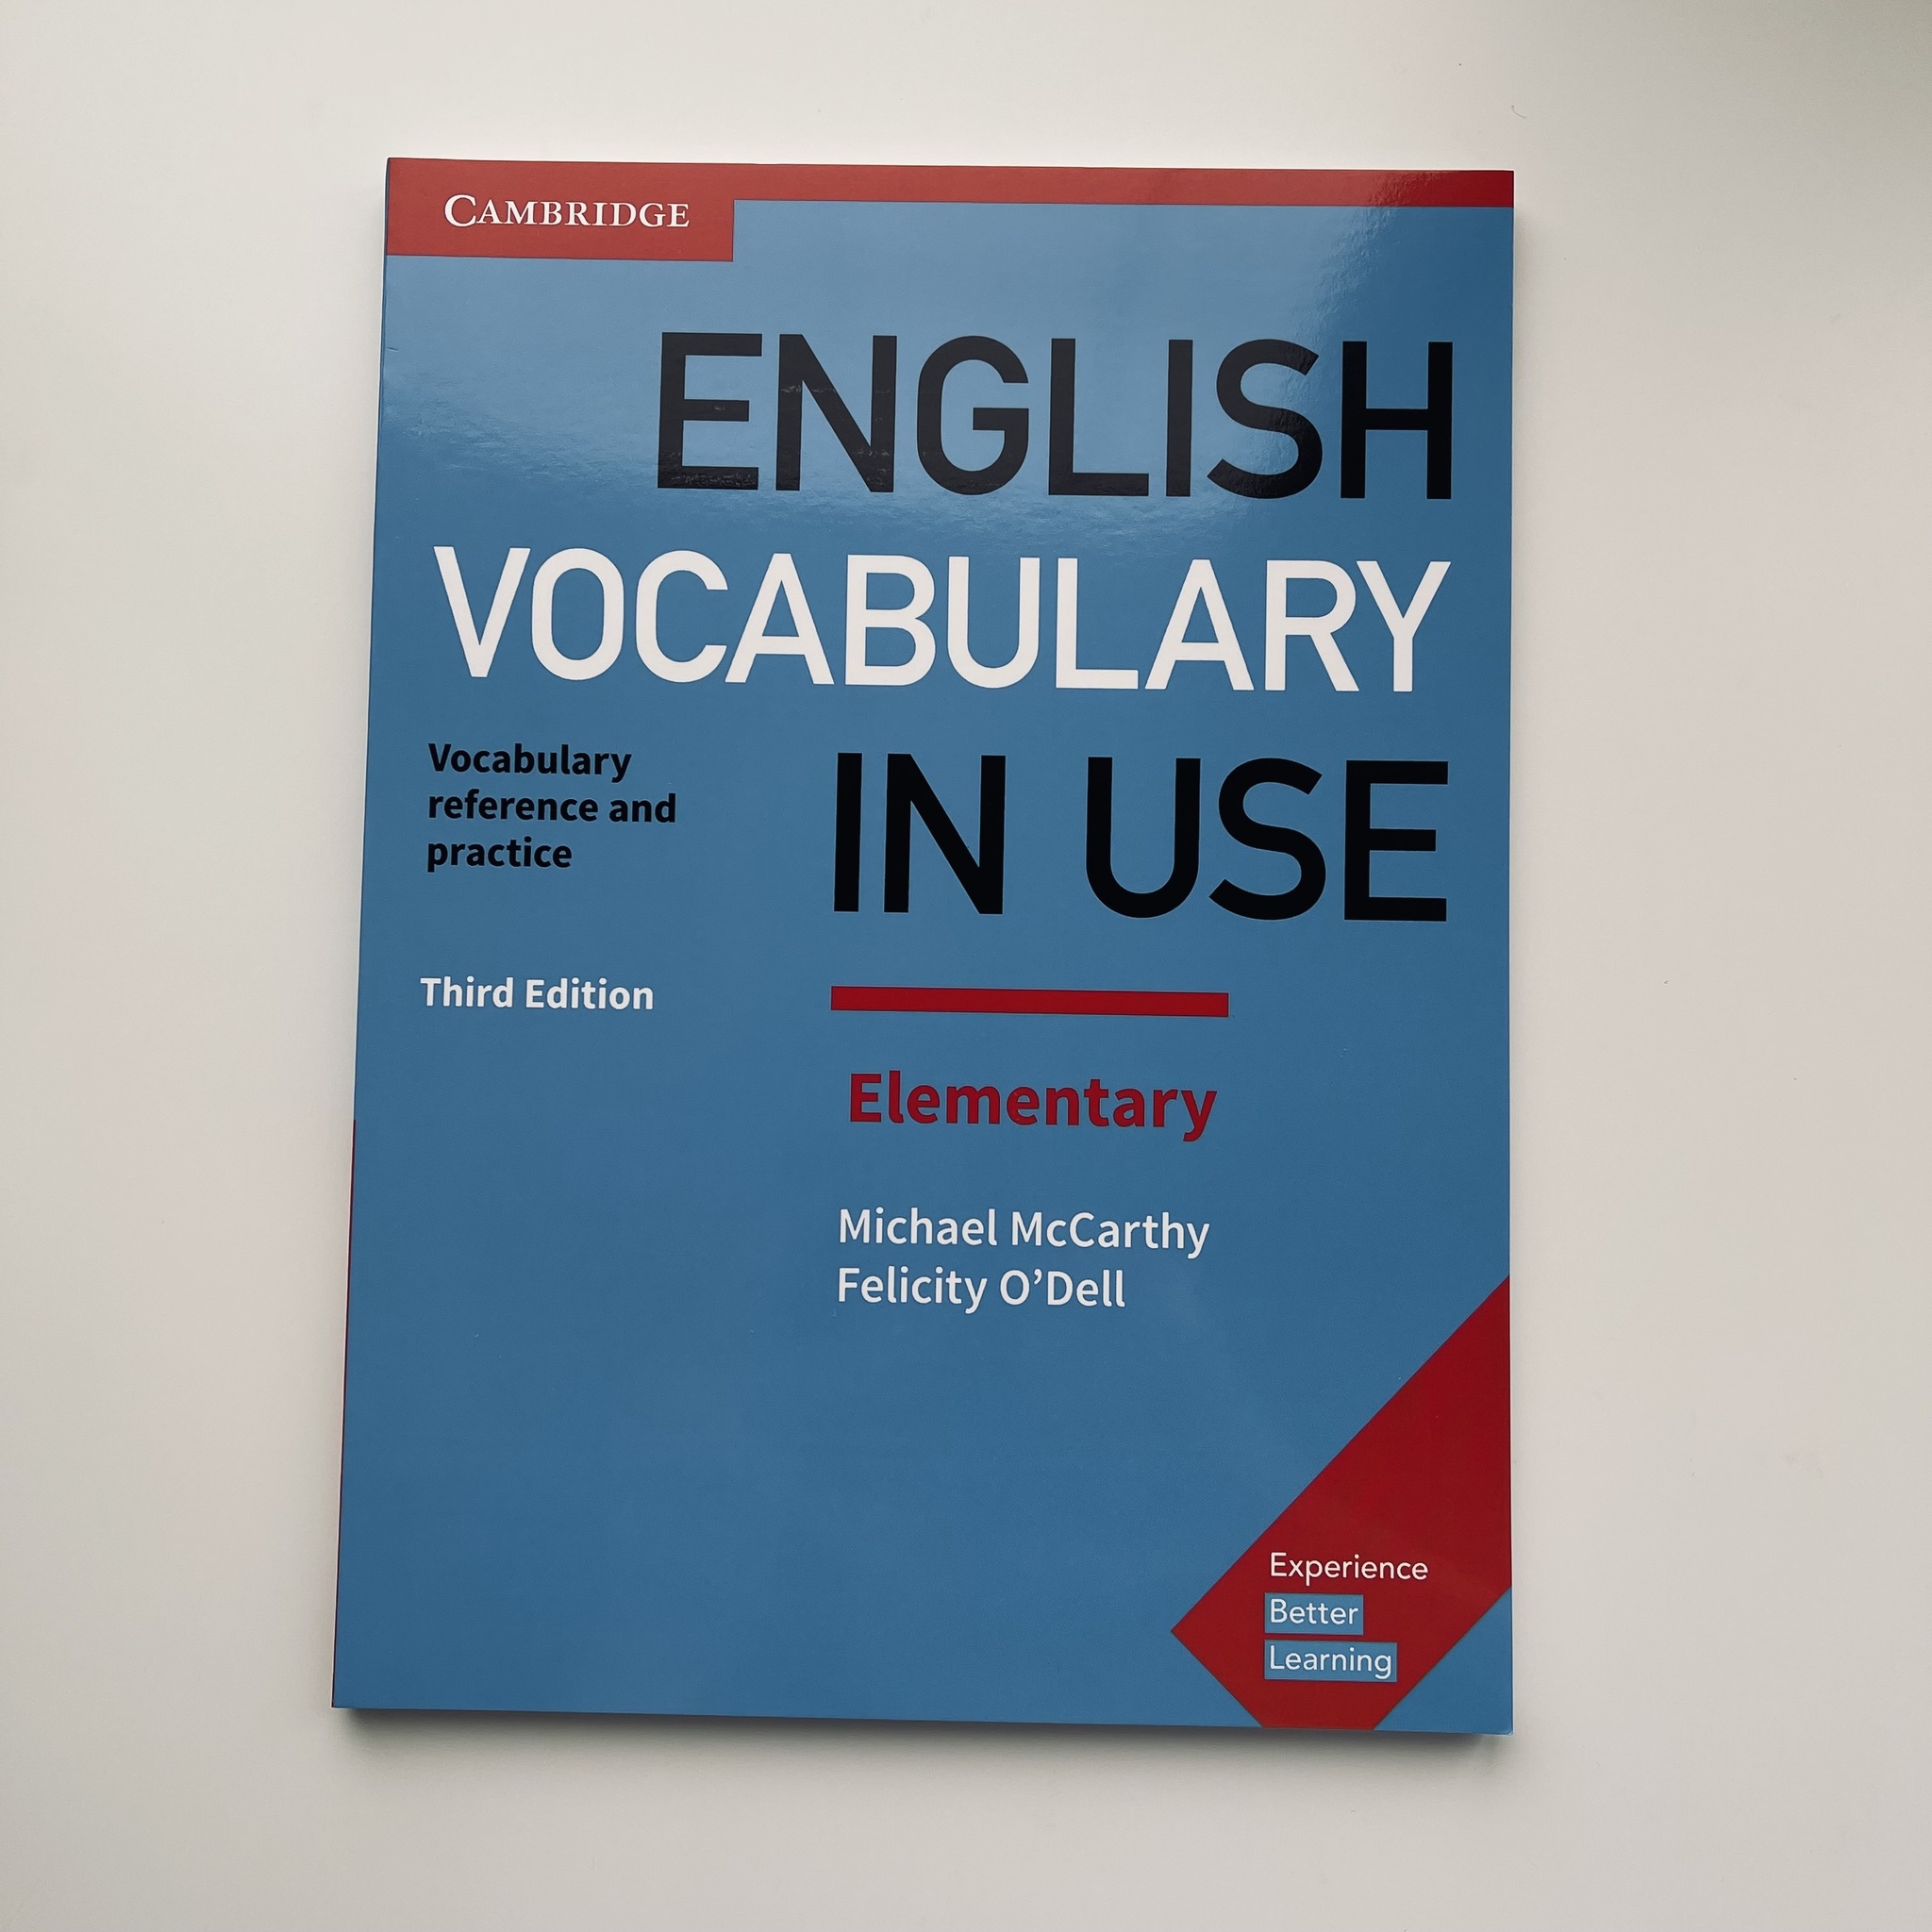 Test english vocabulary in use. English Vocabulary in use. English Vocabulary in use Elementary. English Vocabulary in use Advanced. English Vocabulary in use Elementary pdf.